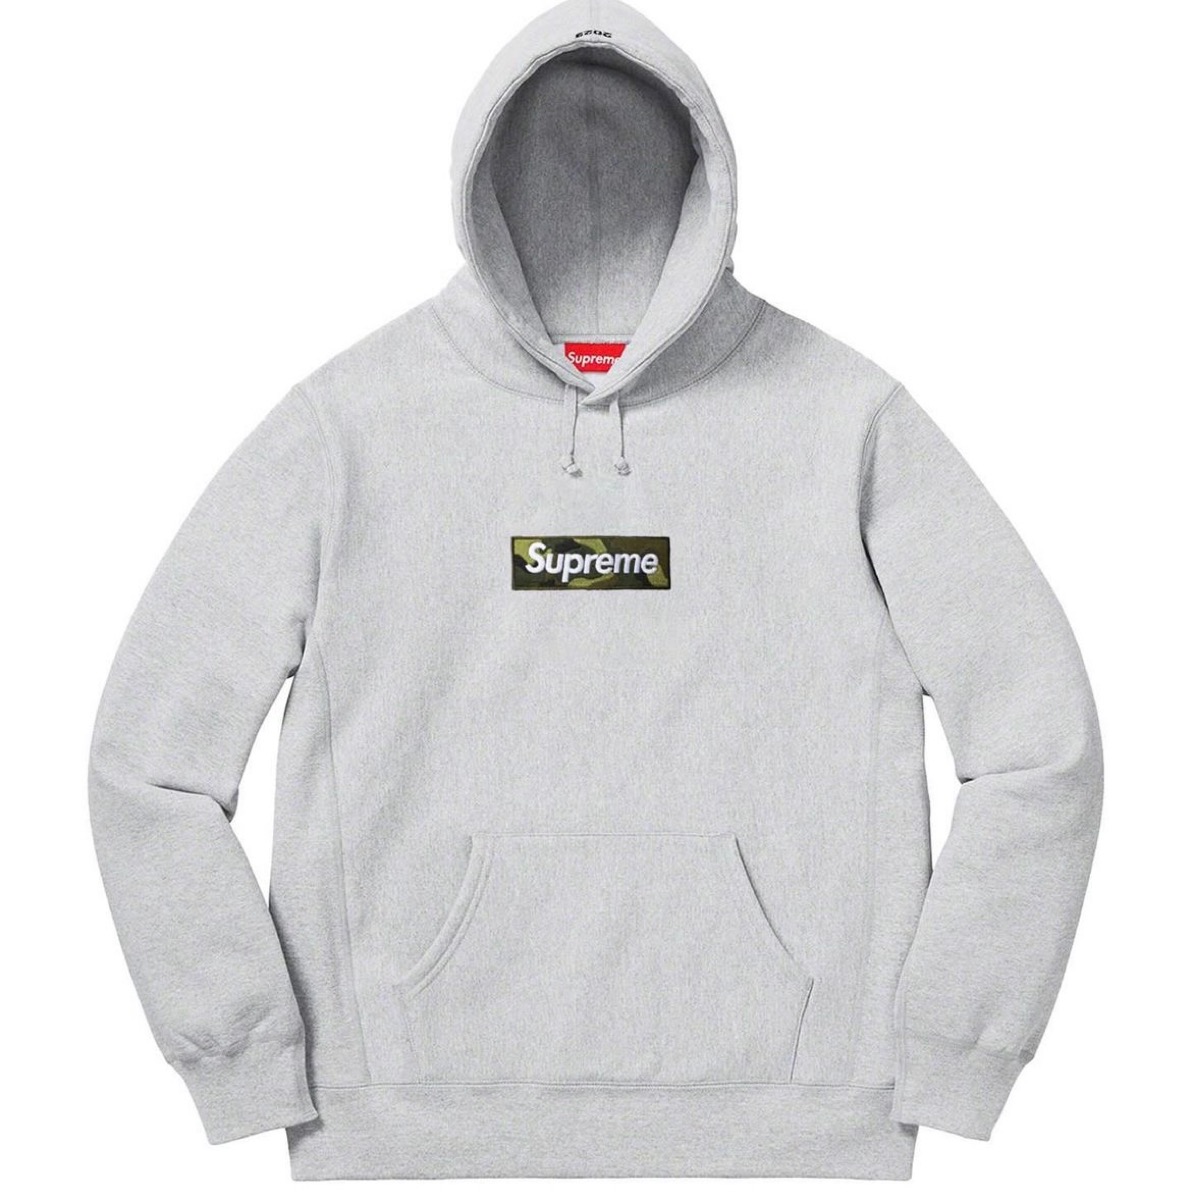 Supreme 23FW Box Logo Hooded Sweatshirt下記無しでお願いします